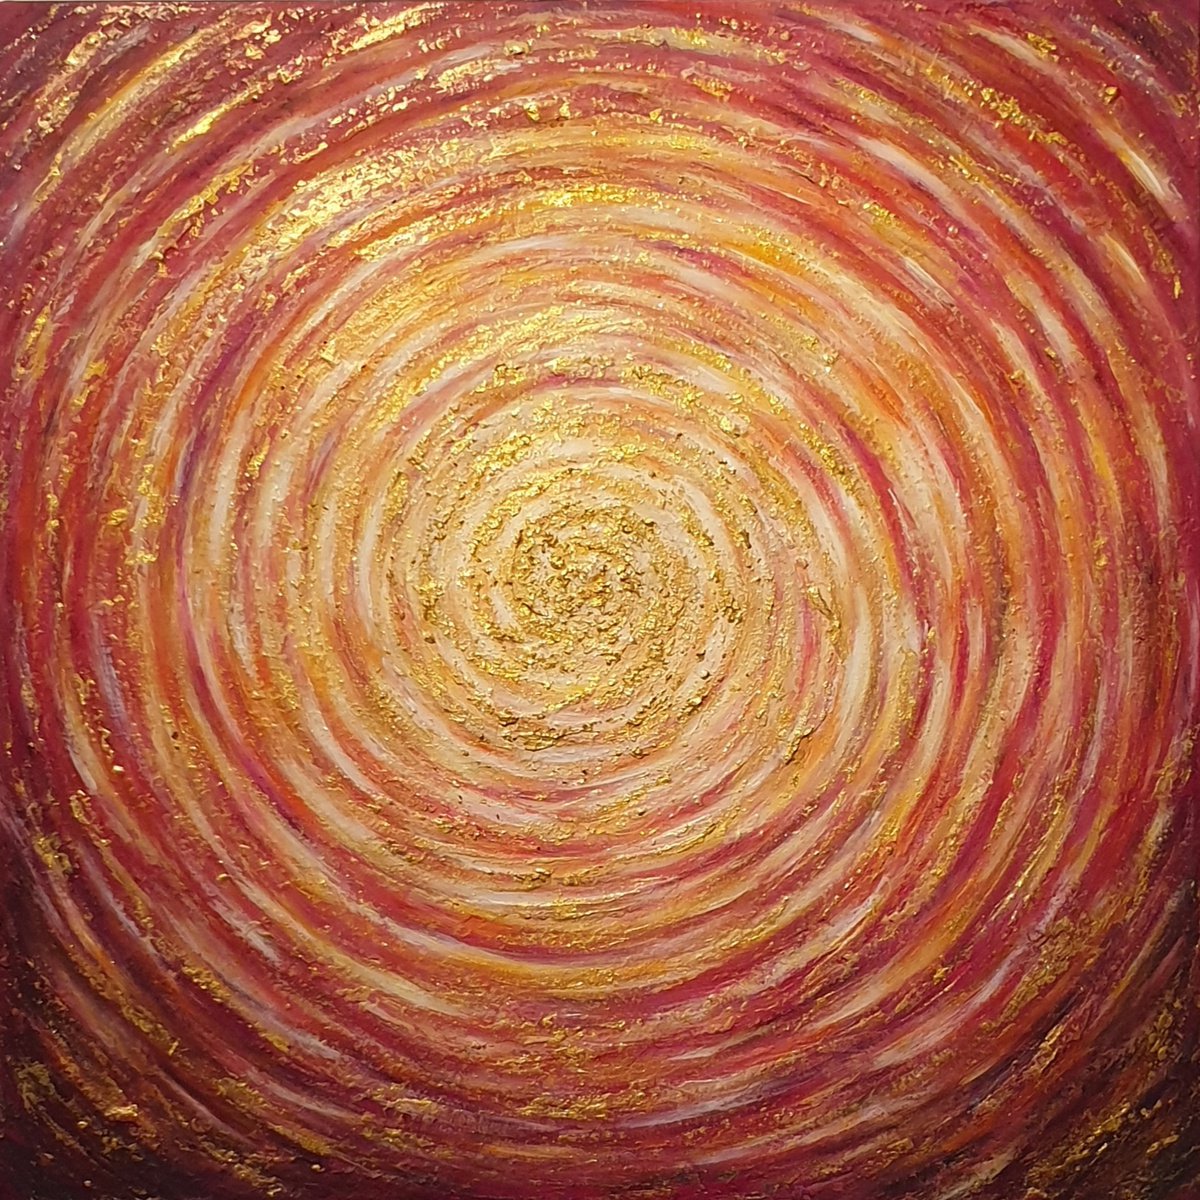 Golden Light Spiral by Isabella Dinstl